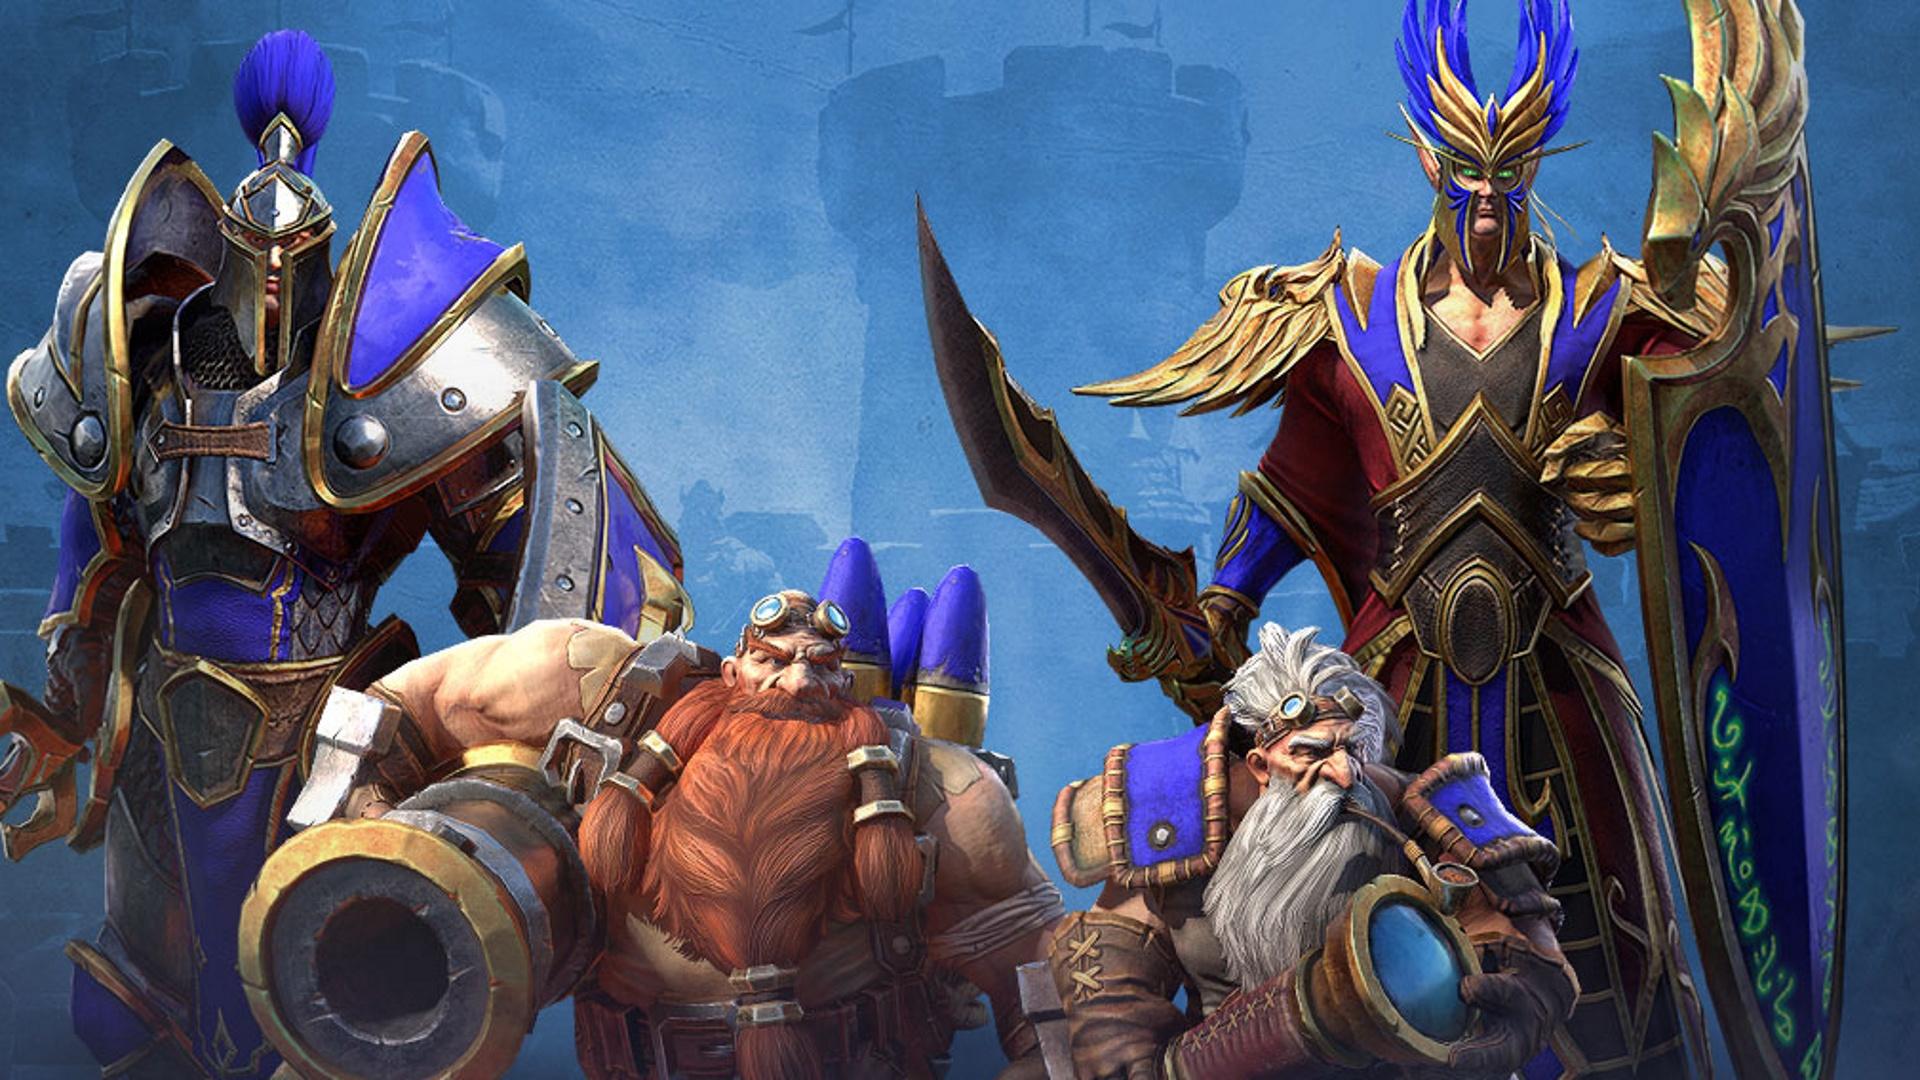 Warcraft 3 HD wallpapers free download | Wallpaperbetter